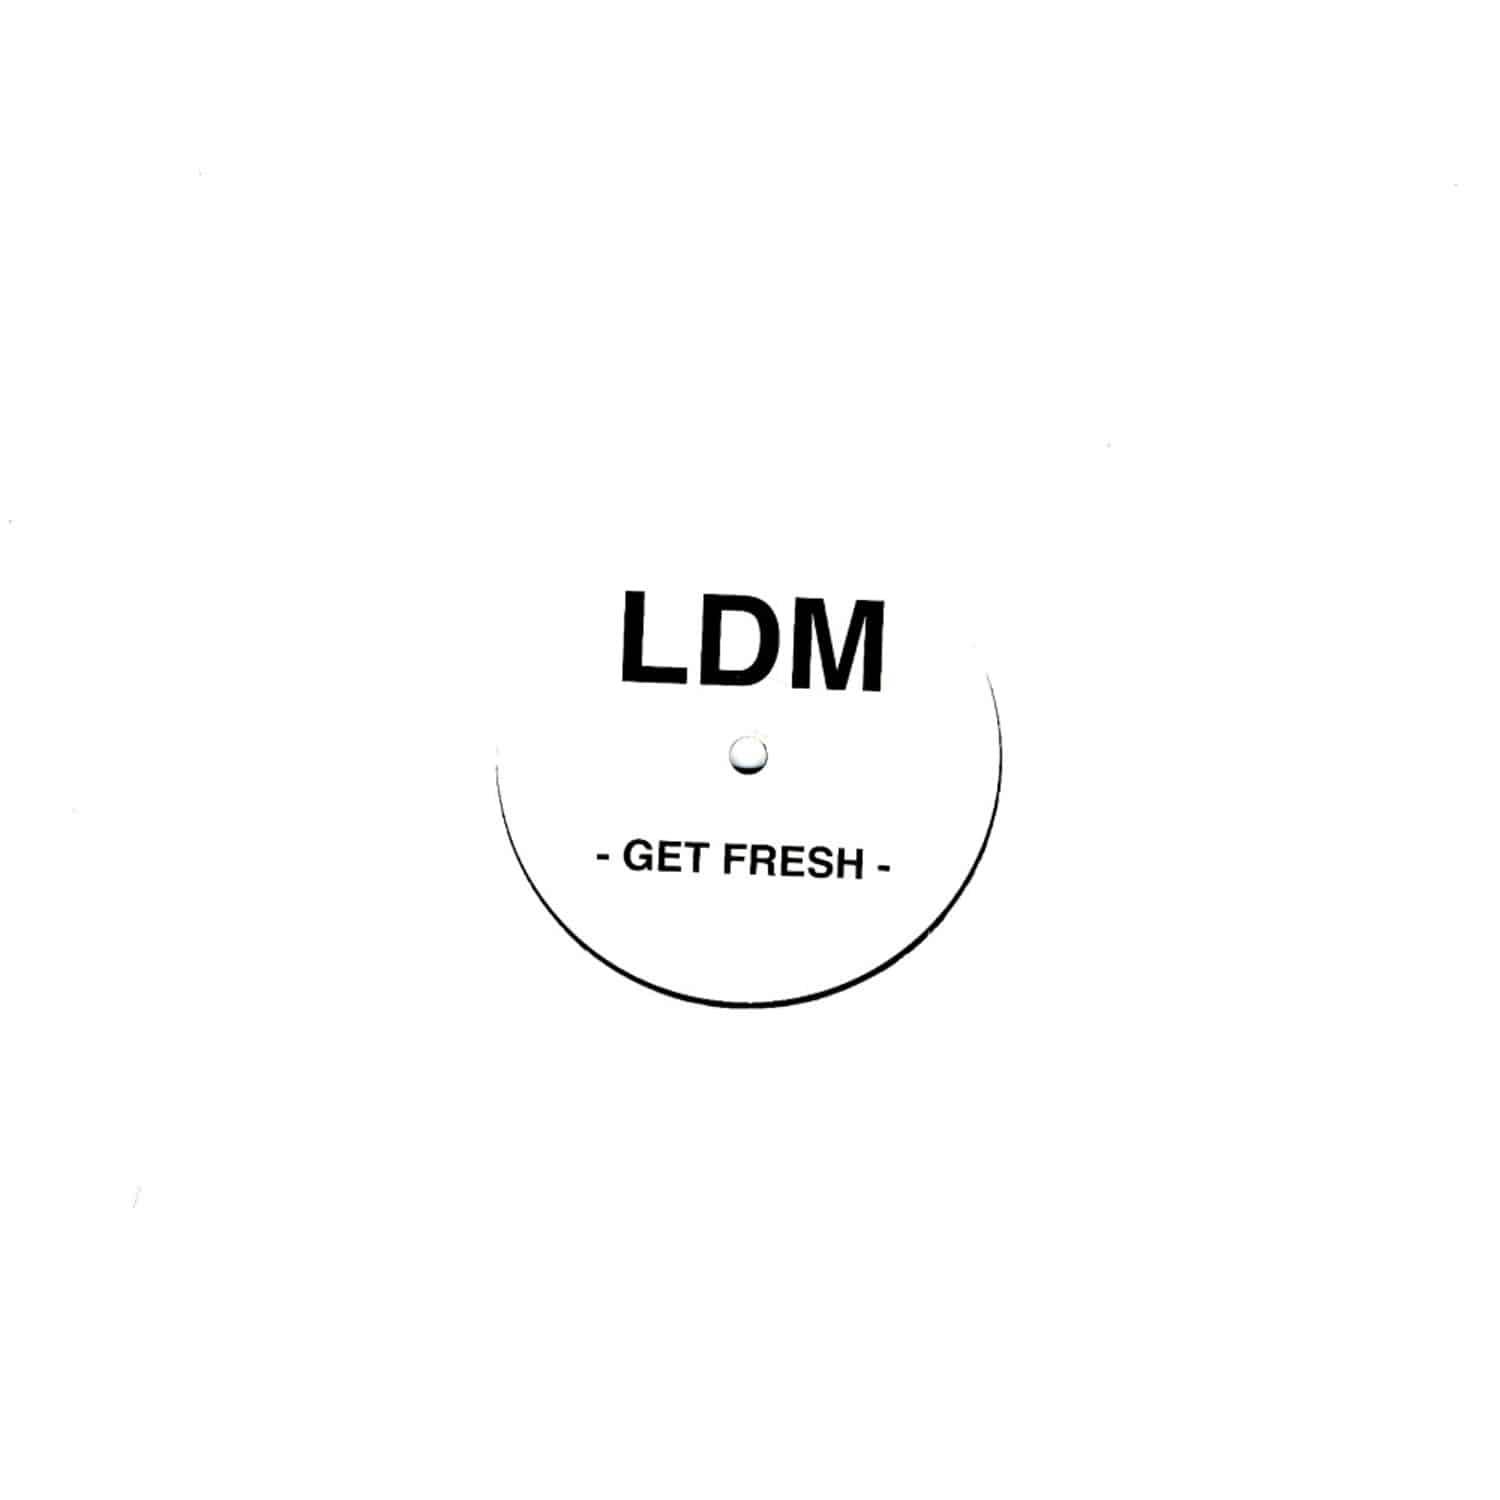 LDM - GET FRESH